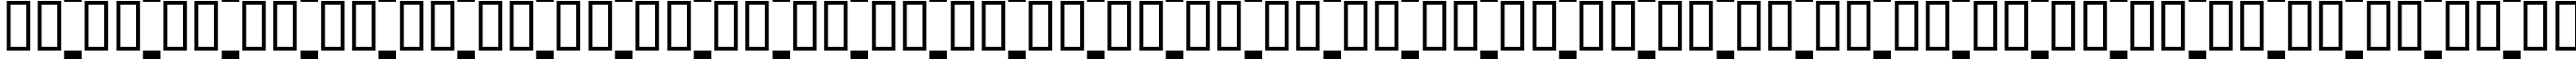 Пример написания русского алфавита шрифтом Shadow Tag